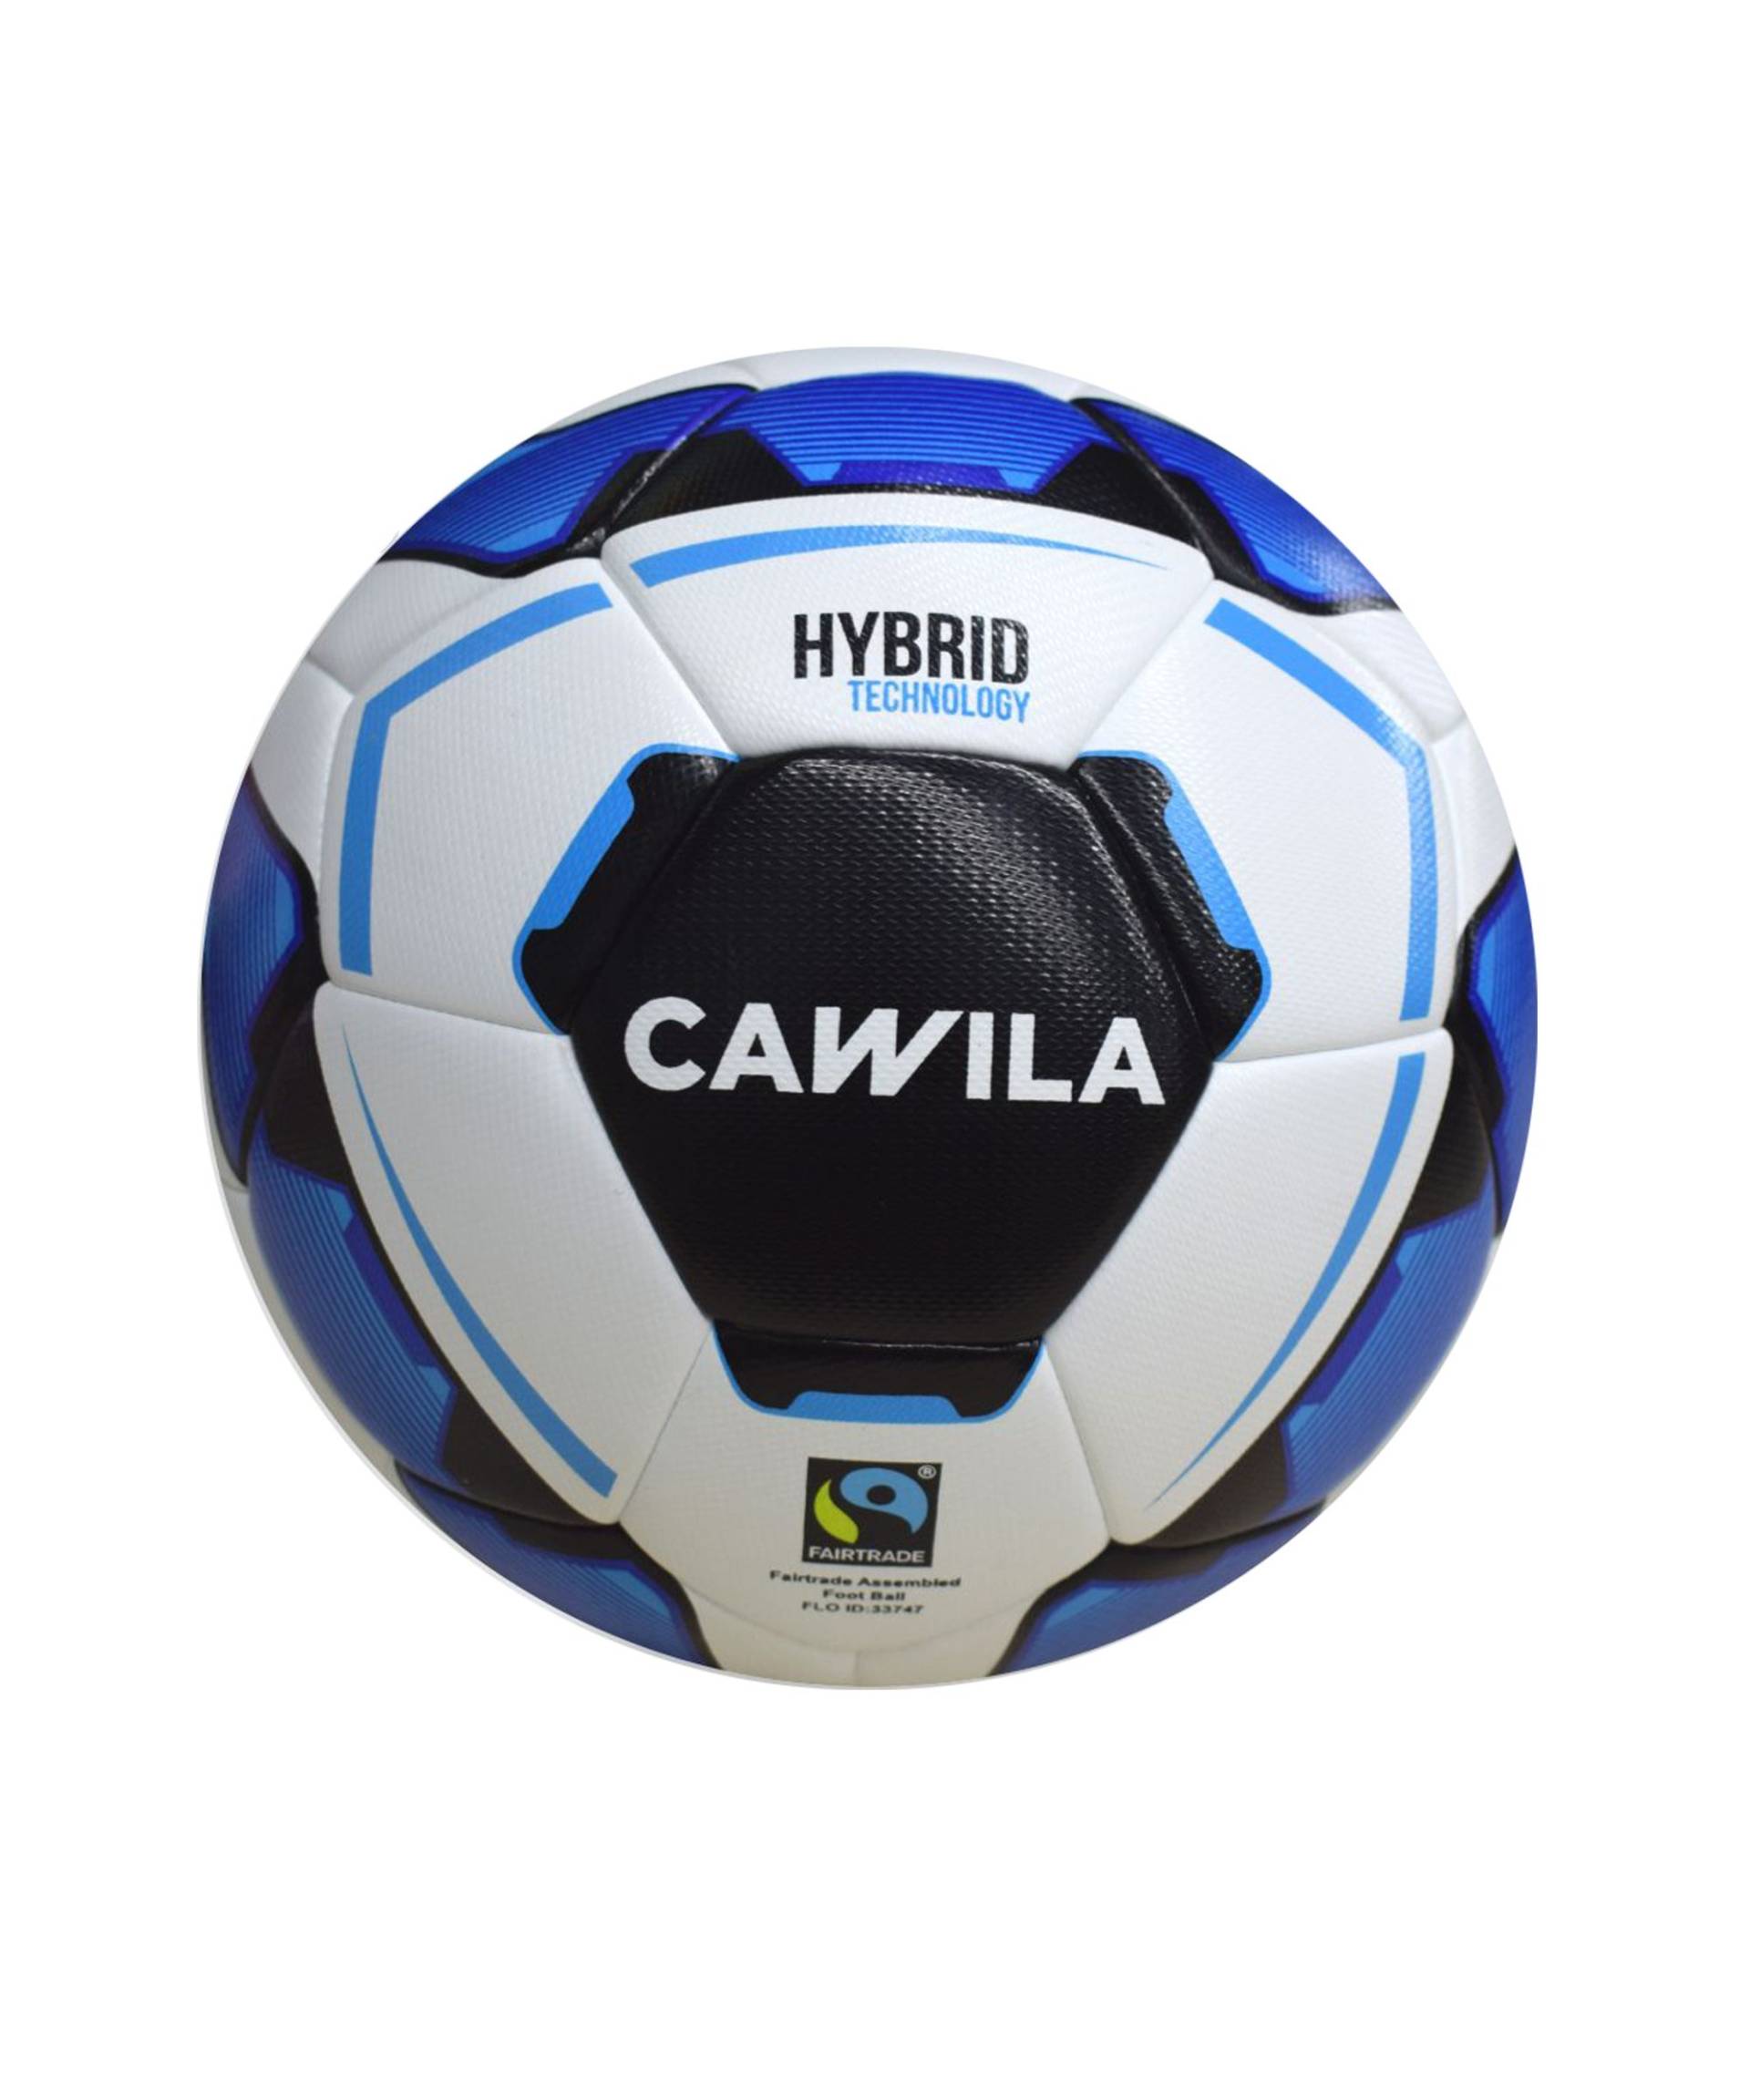 Cawila MISSION HYBRID LITE Fairtrade 350g Trainingsball Gr.4 von cawila